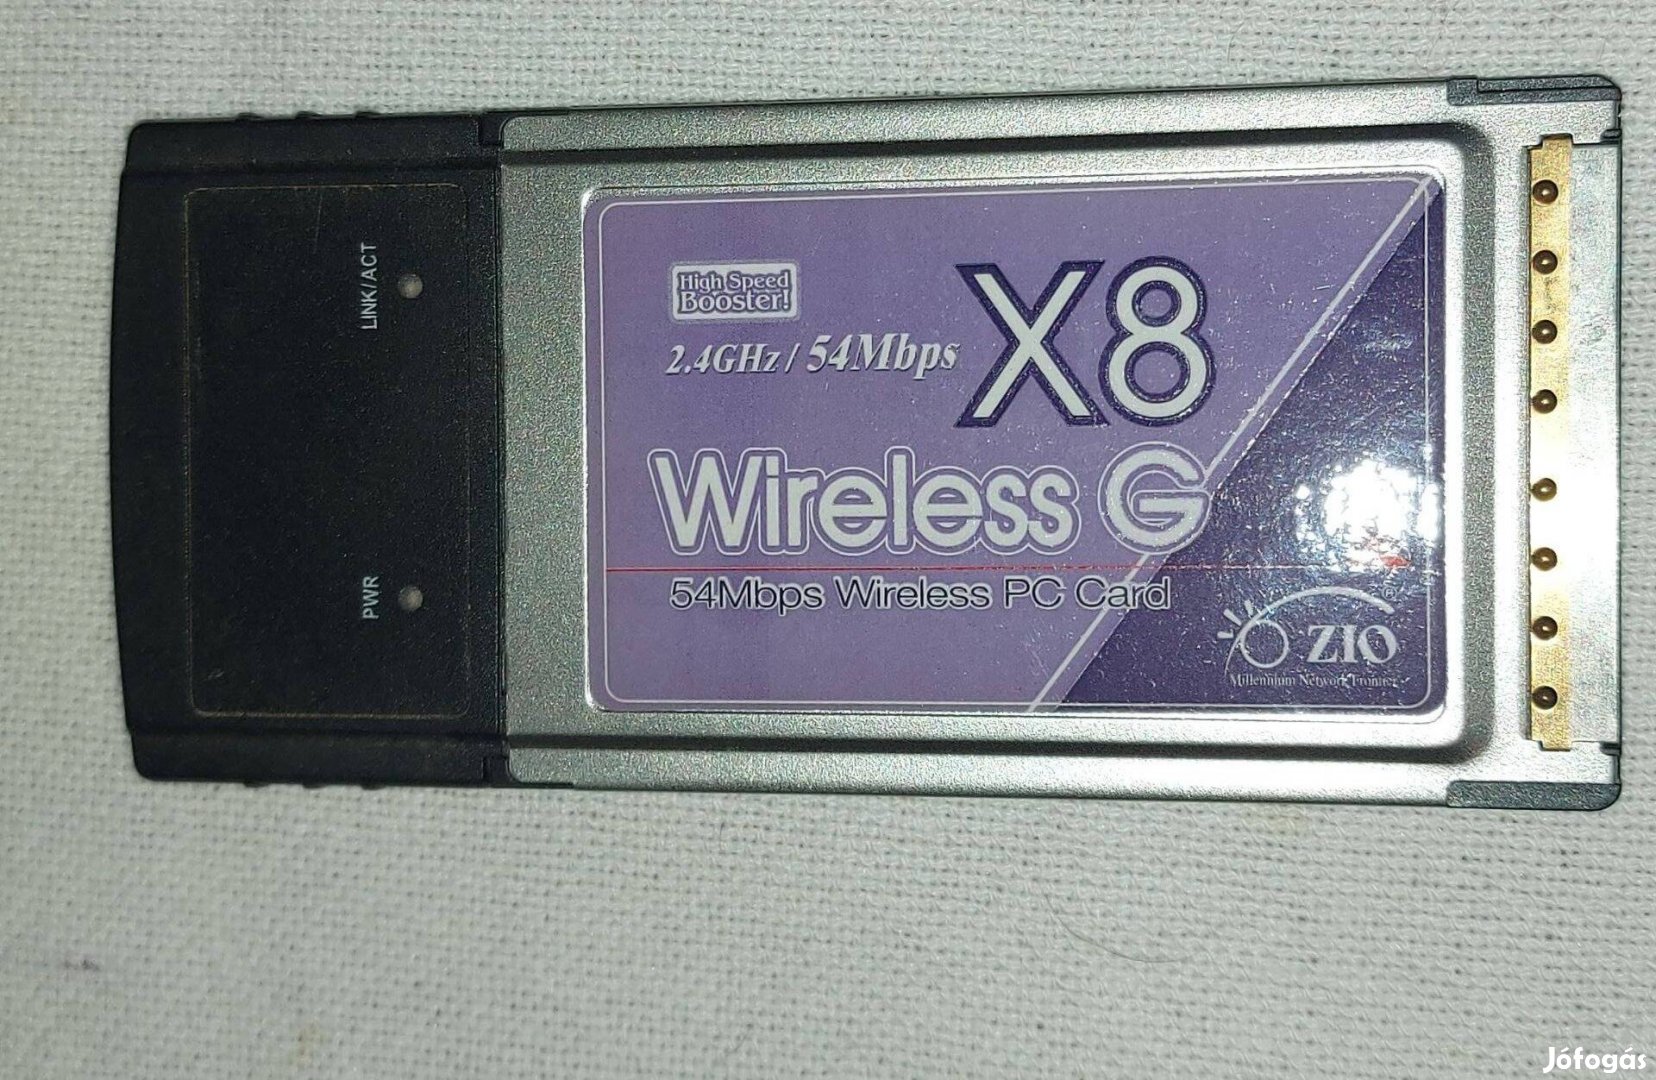 Wireless G PC card X8 2.4GHz 54Mbps 2900Ft Eger